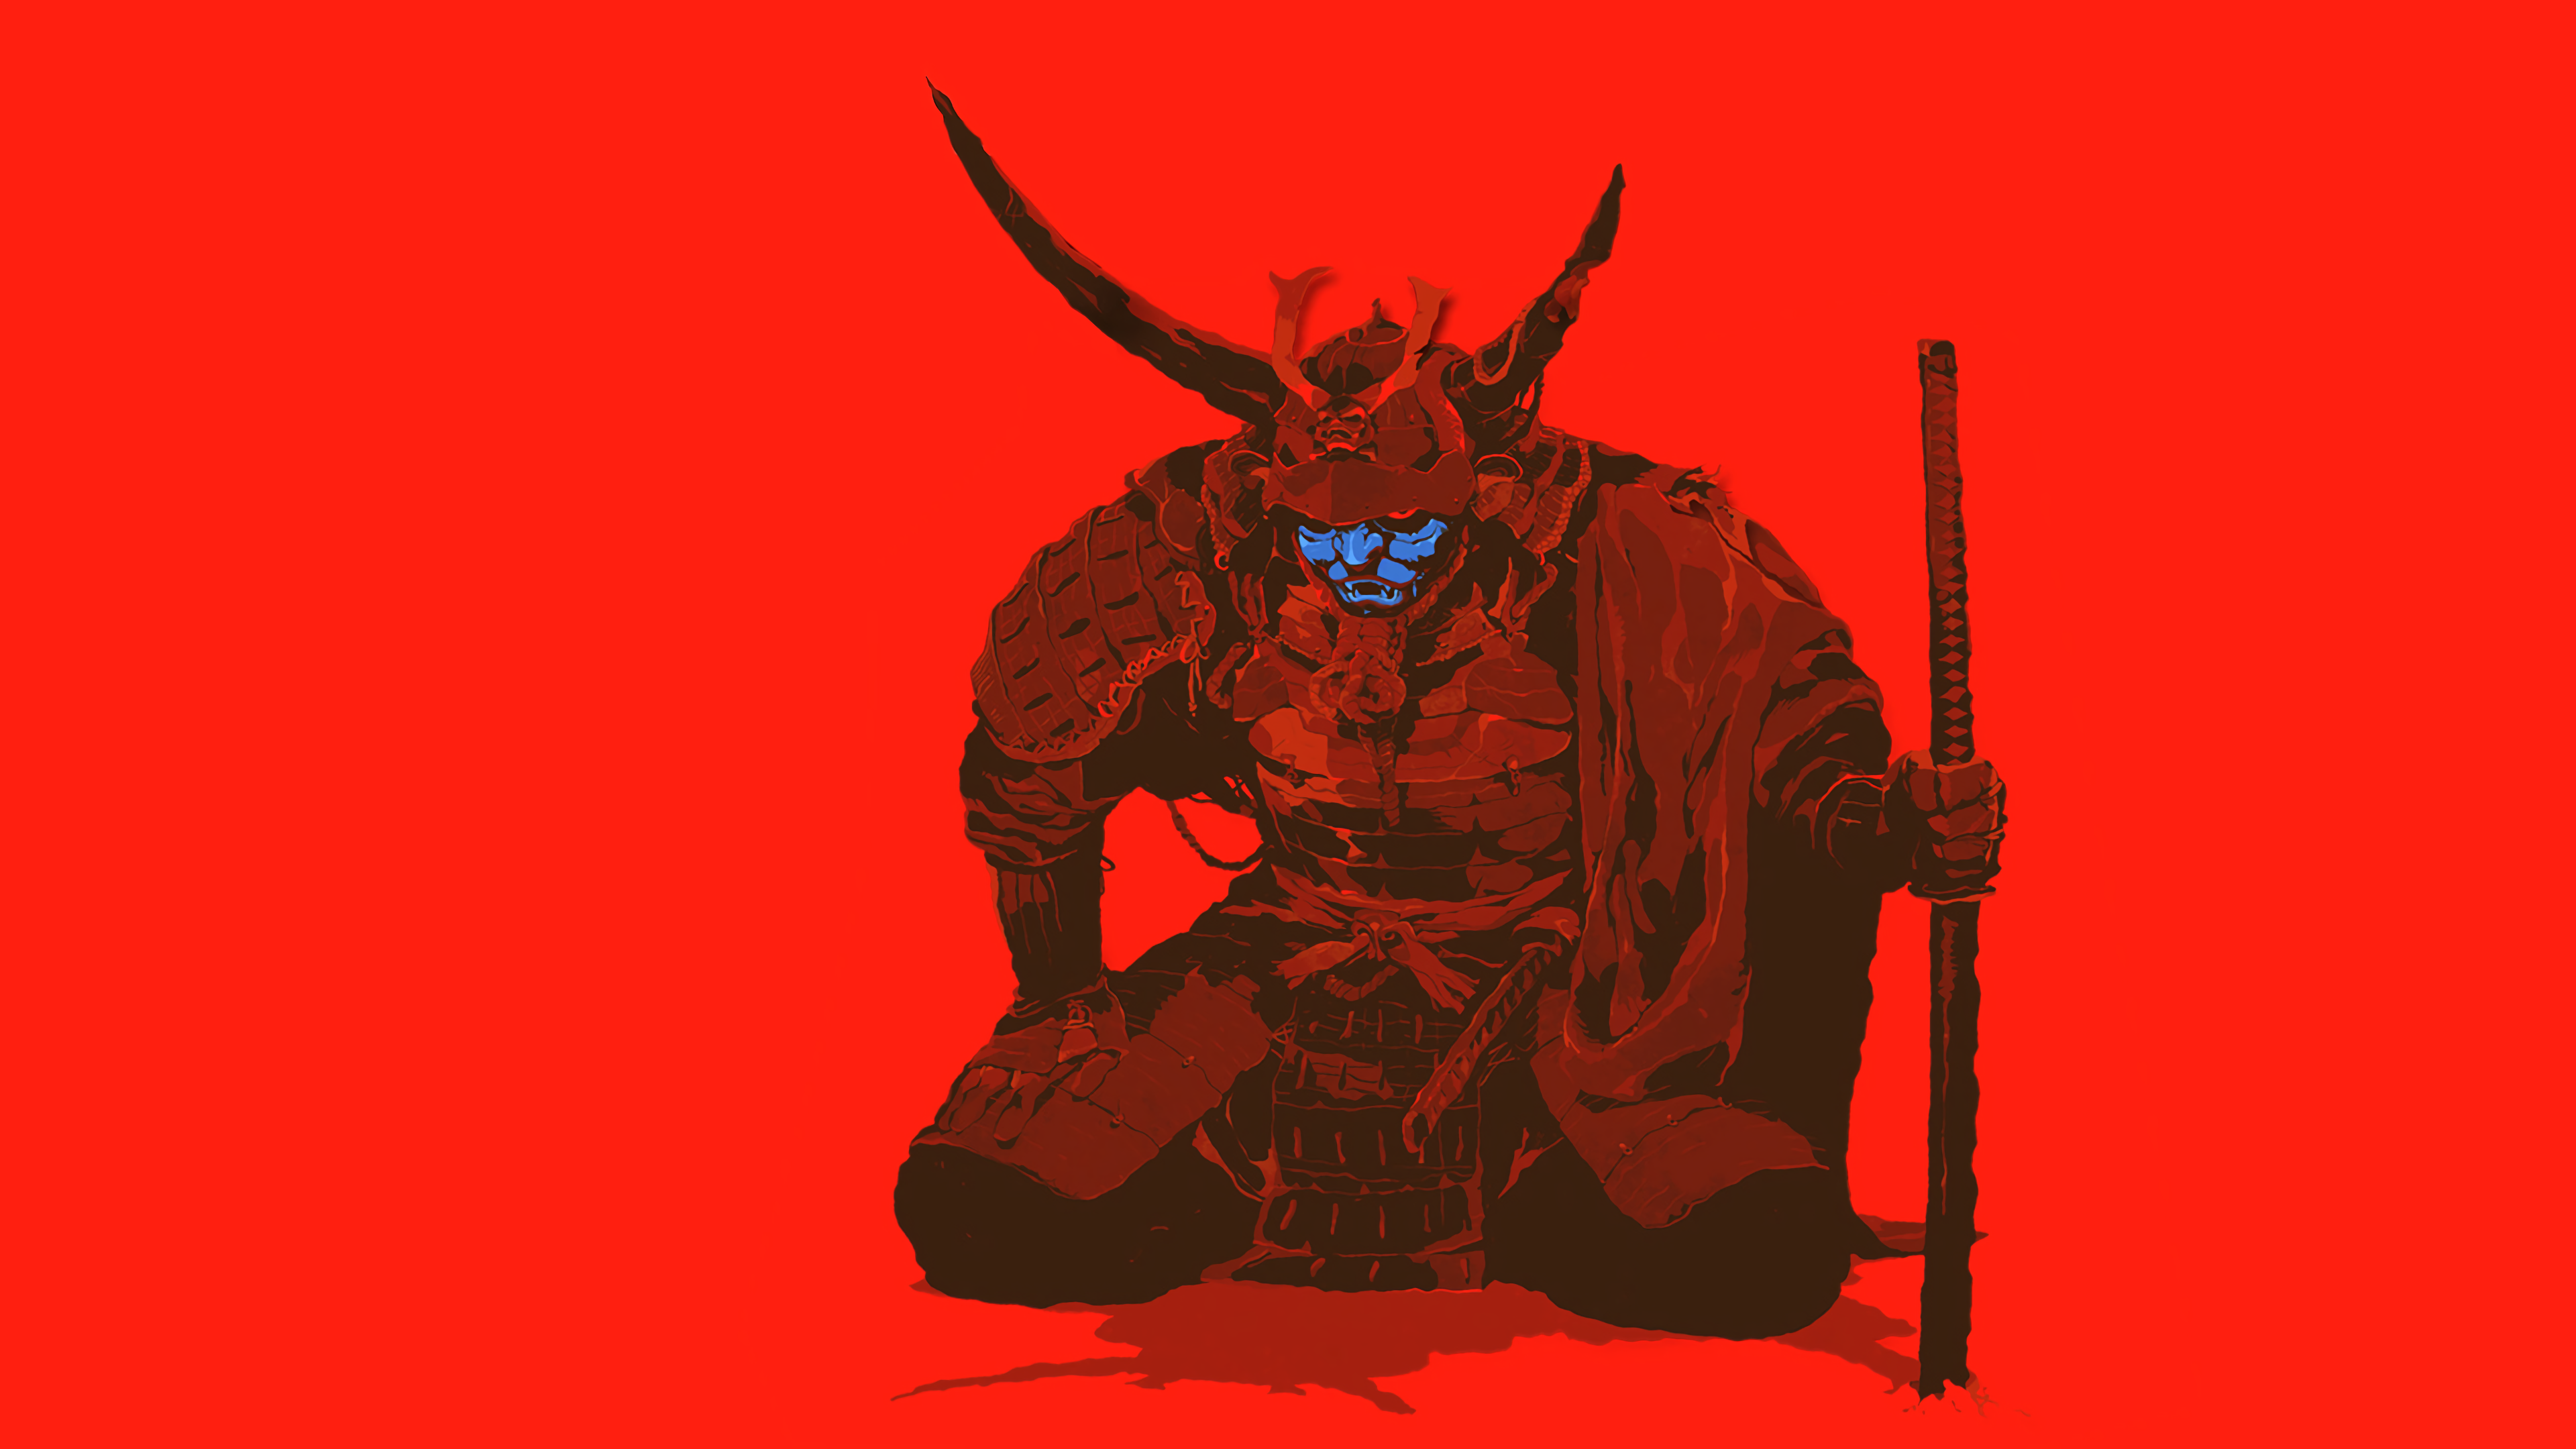 General 3840x2160 samurai Japan minimalism red red background horns oni mask katana simple background fantasy art sword